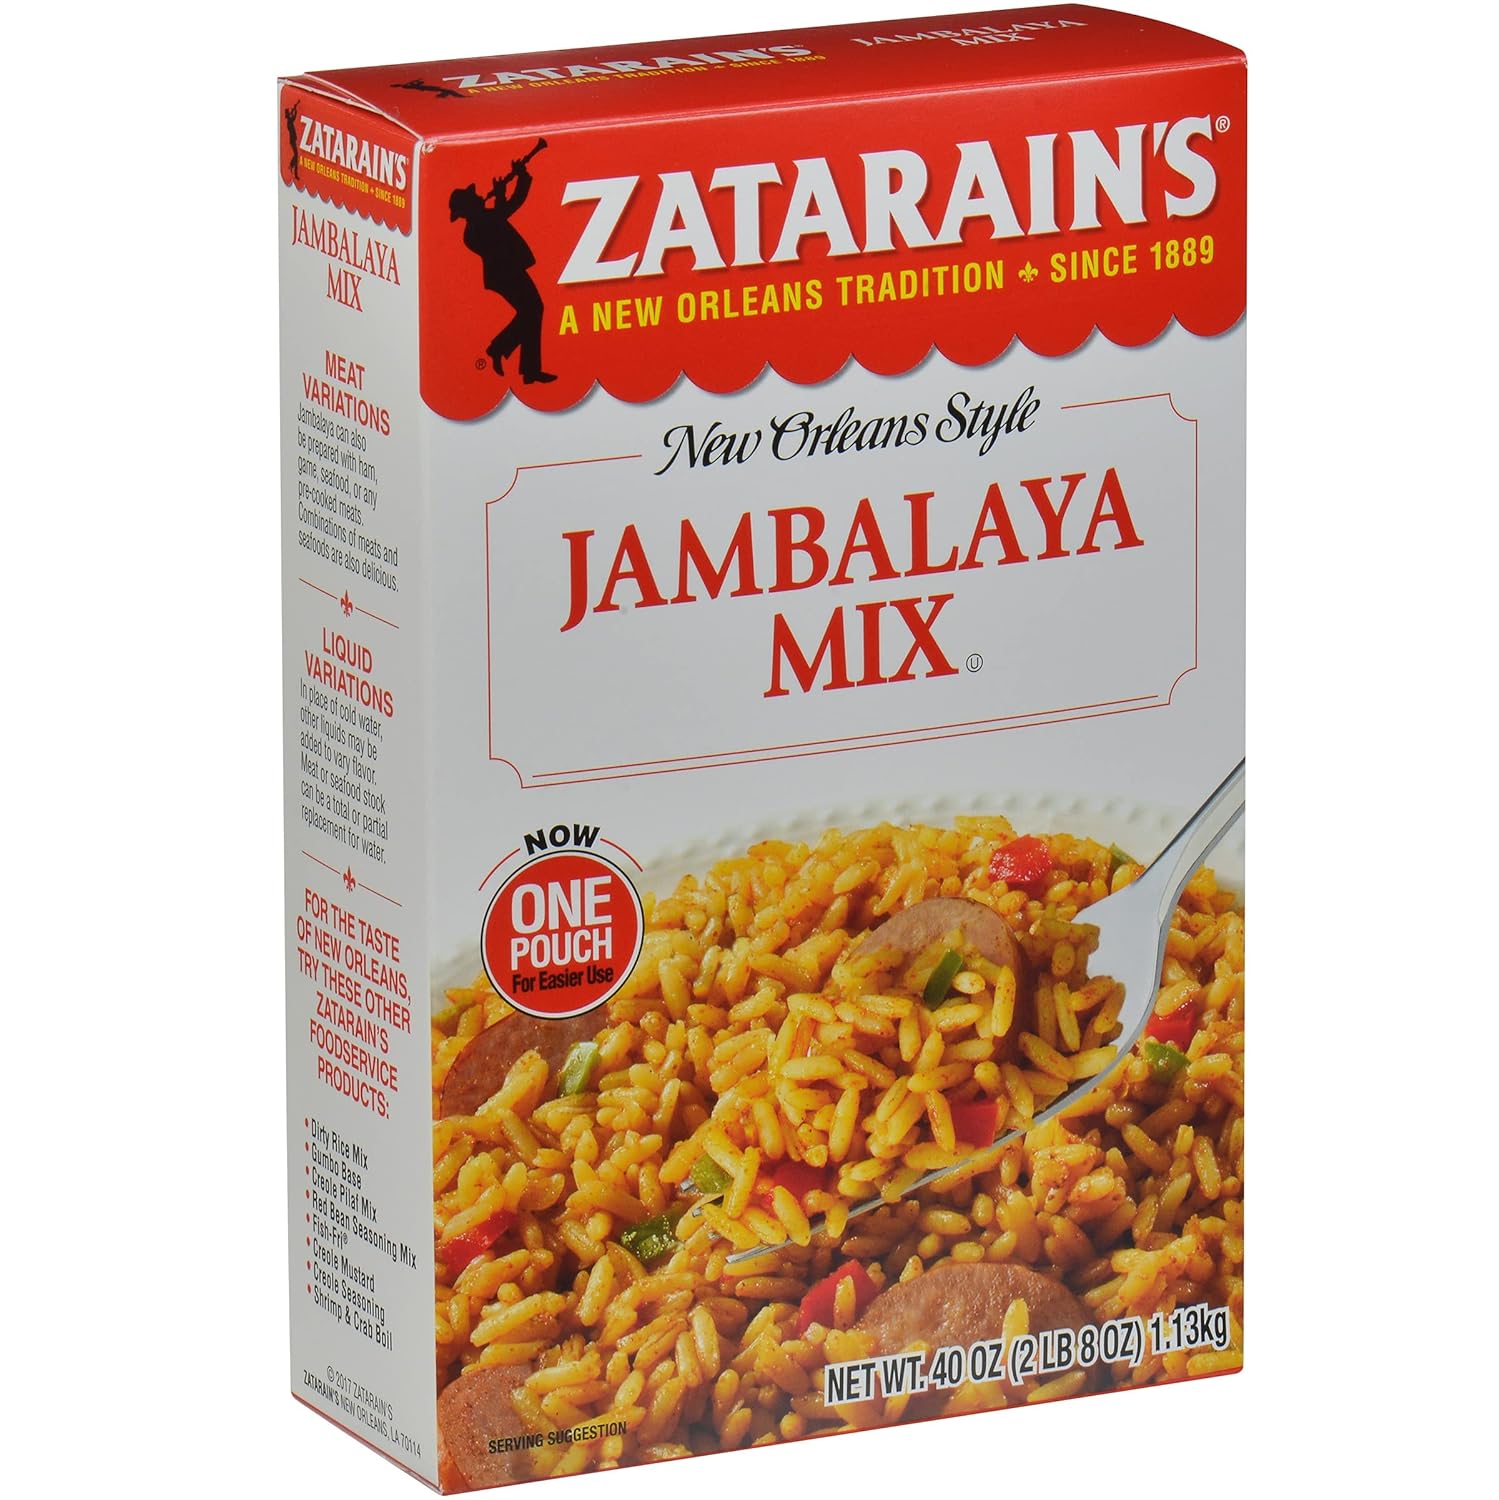 Zatarain's Jambalaya Mix, 40 oz - One 40 Ounce Box of Jambalaya Rice Mix, Perfect as a Stand-Alone Side or Signature Cajun Dish with Sausage, Chicken or Seafood